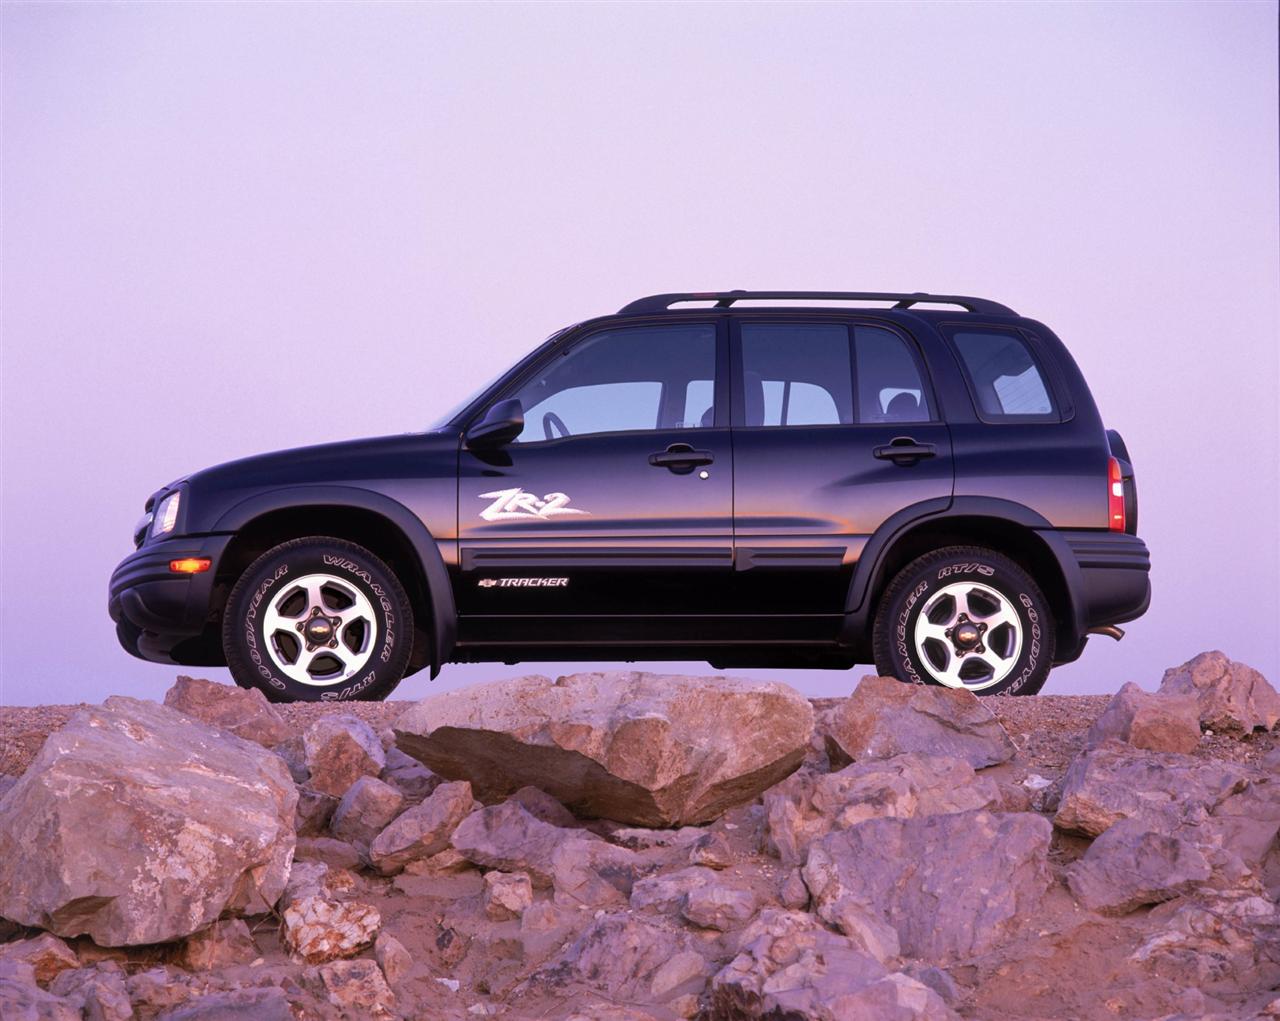 2004 Chevrolet Tracker